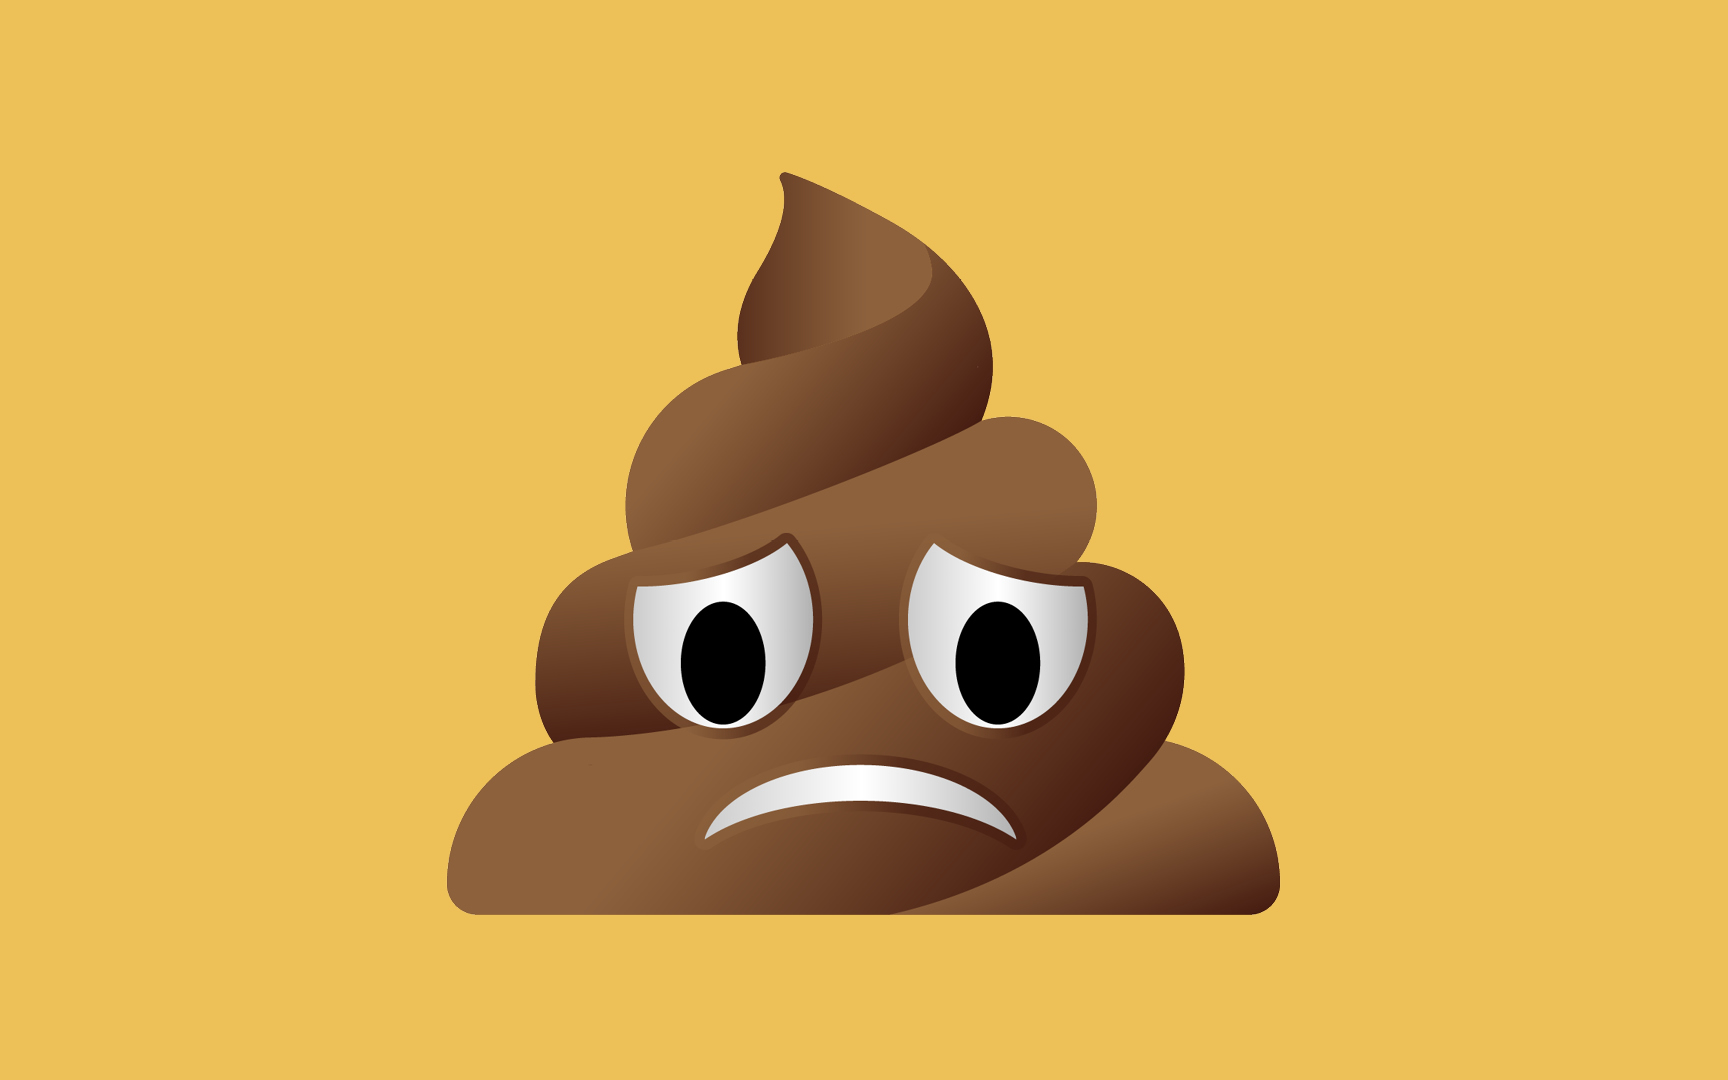 CALM's sad pile of poo emoji